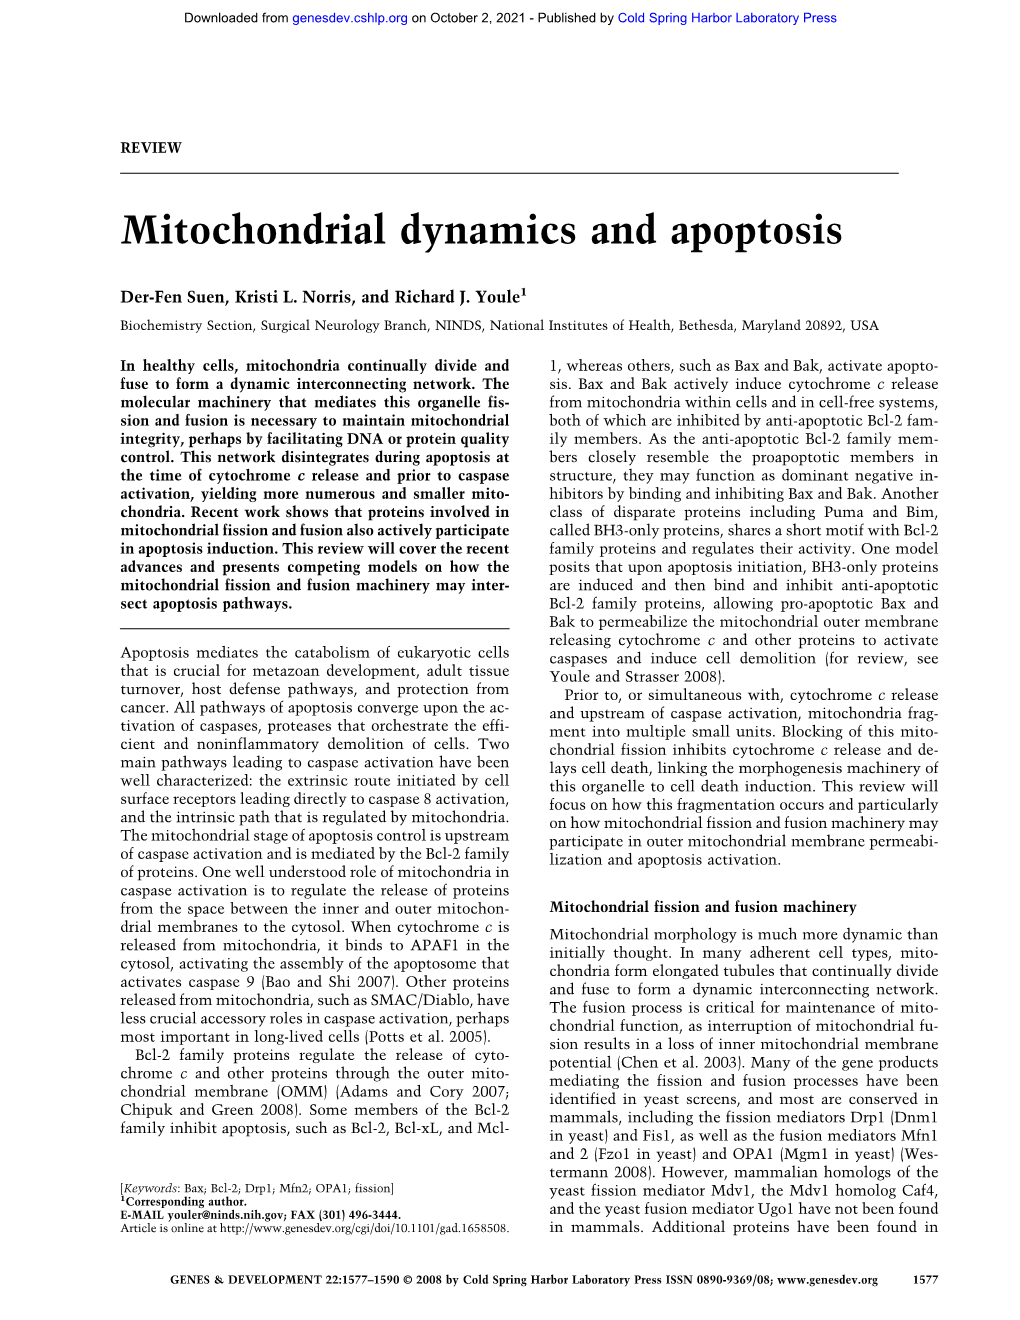 Mitochondrial Dynamics and Apoptosis